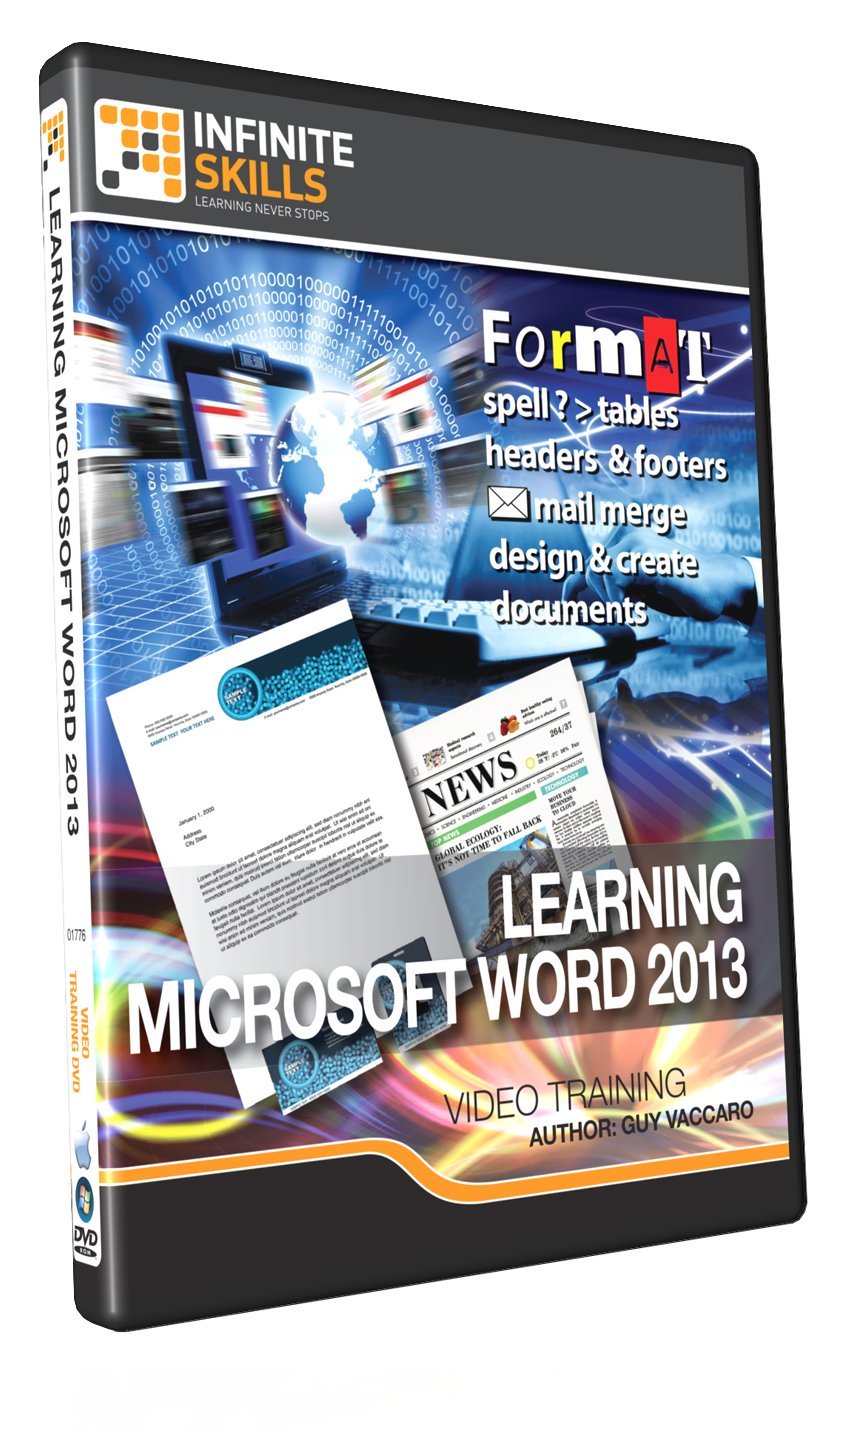 Learning Microsoft Word 2013